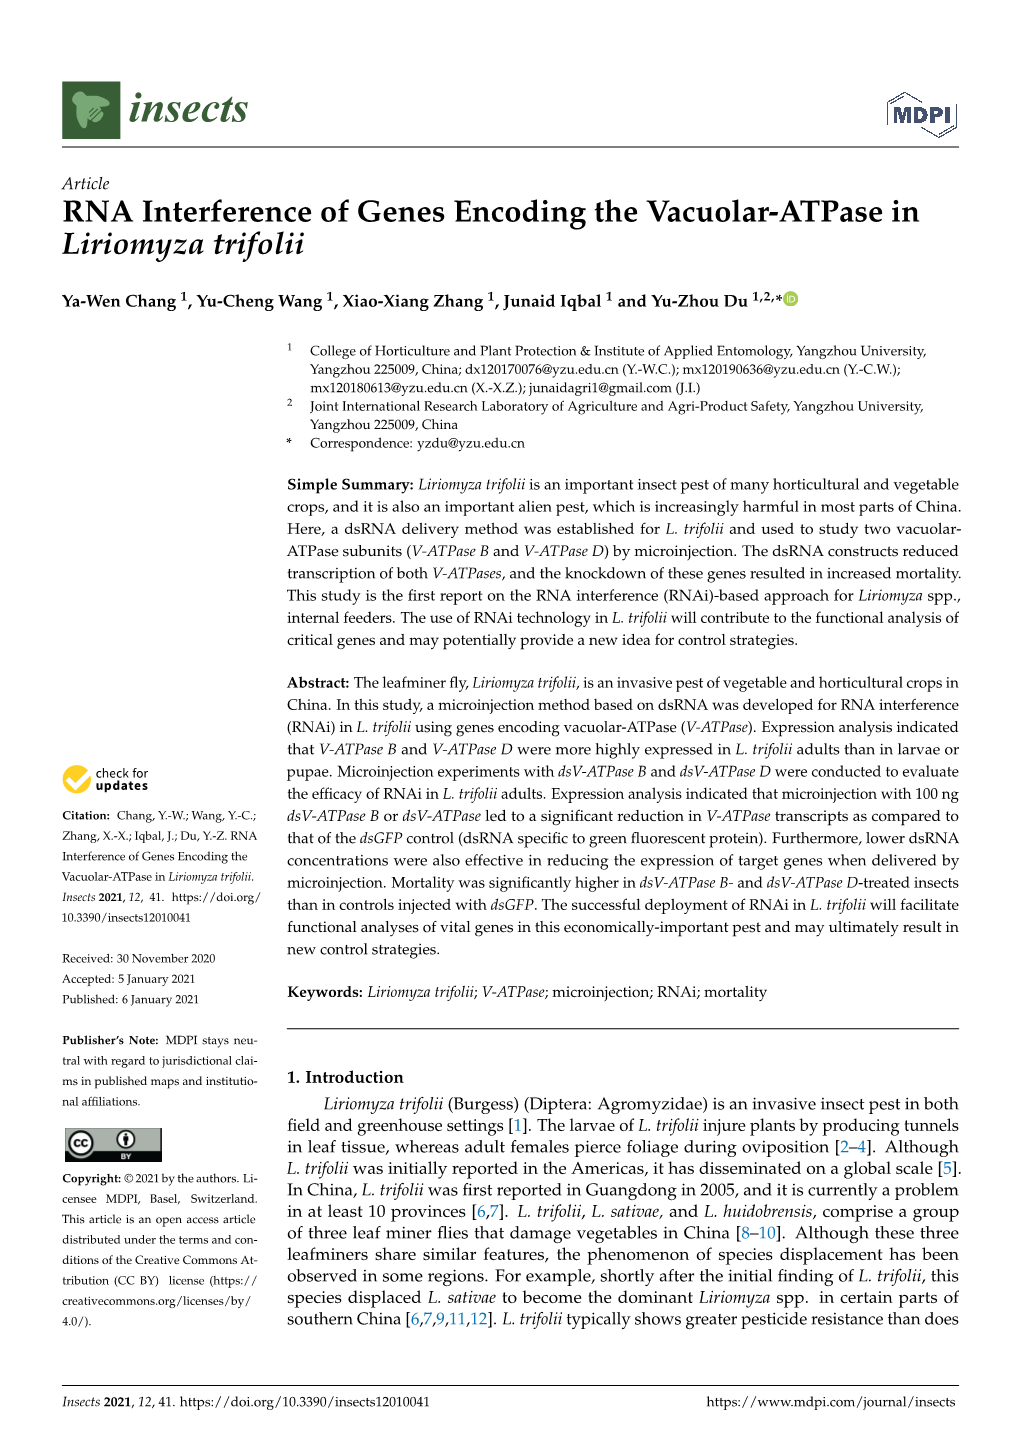 RNA Interference of Genes Encoding the Vacuolar-Atpase in Liriomyza Trifolii